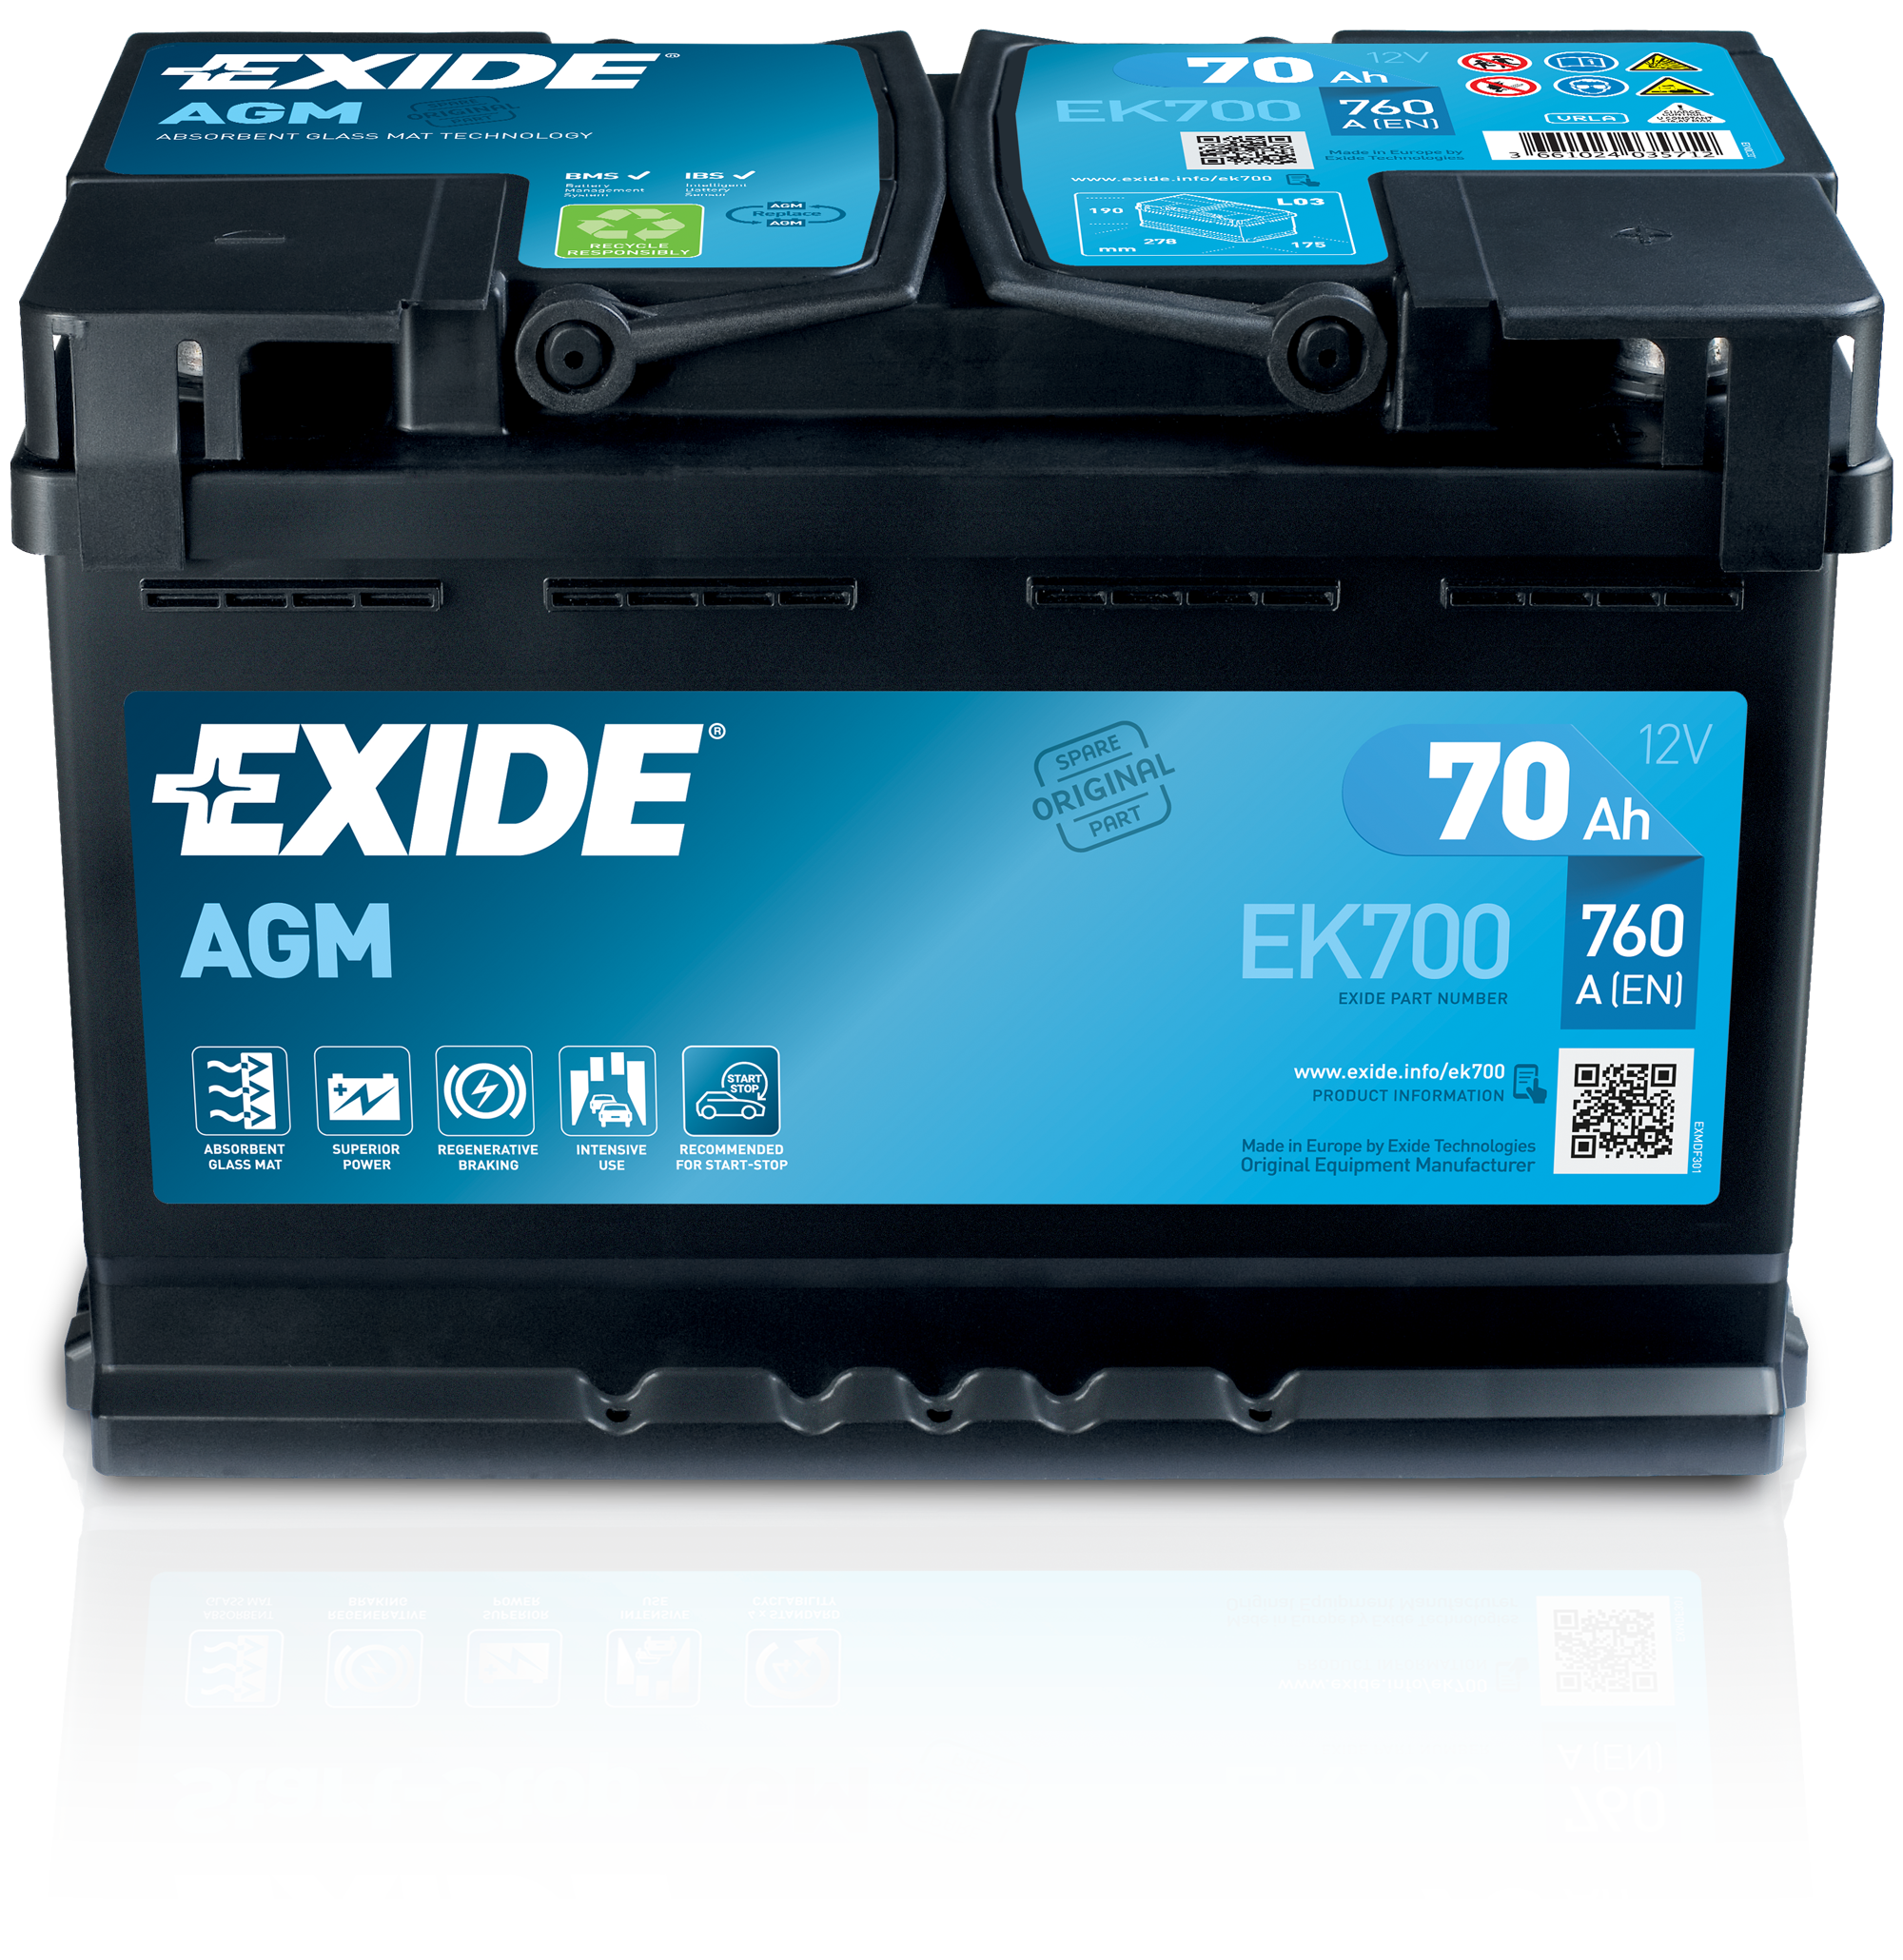 Exide AGM Ready – Starterbatterien